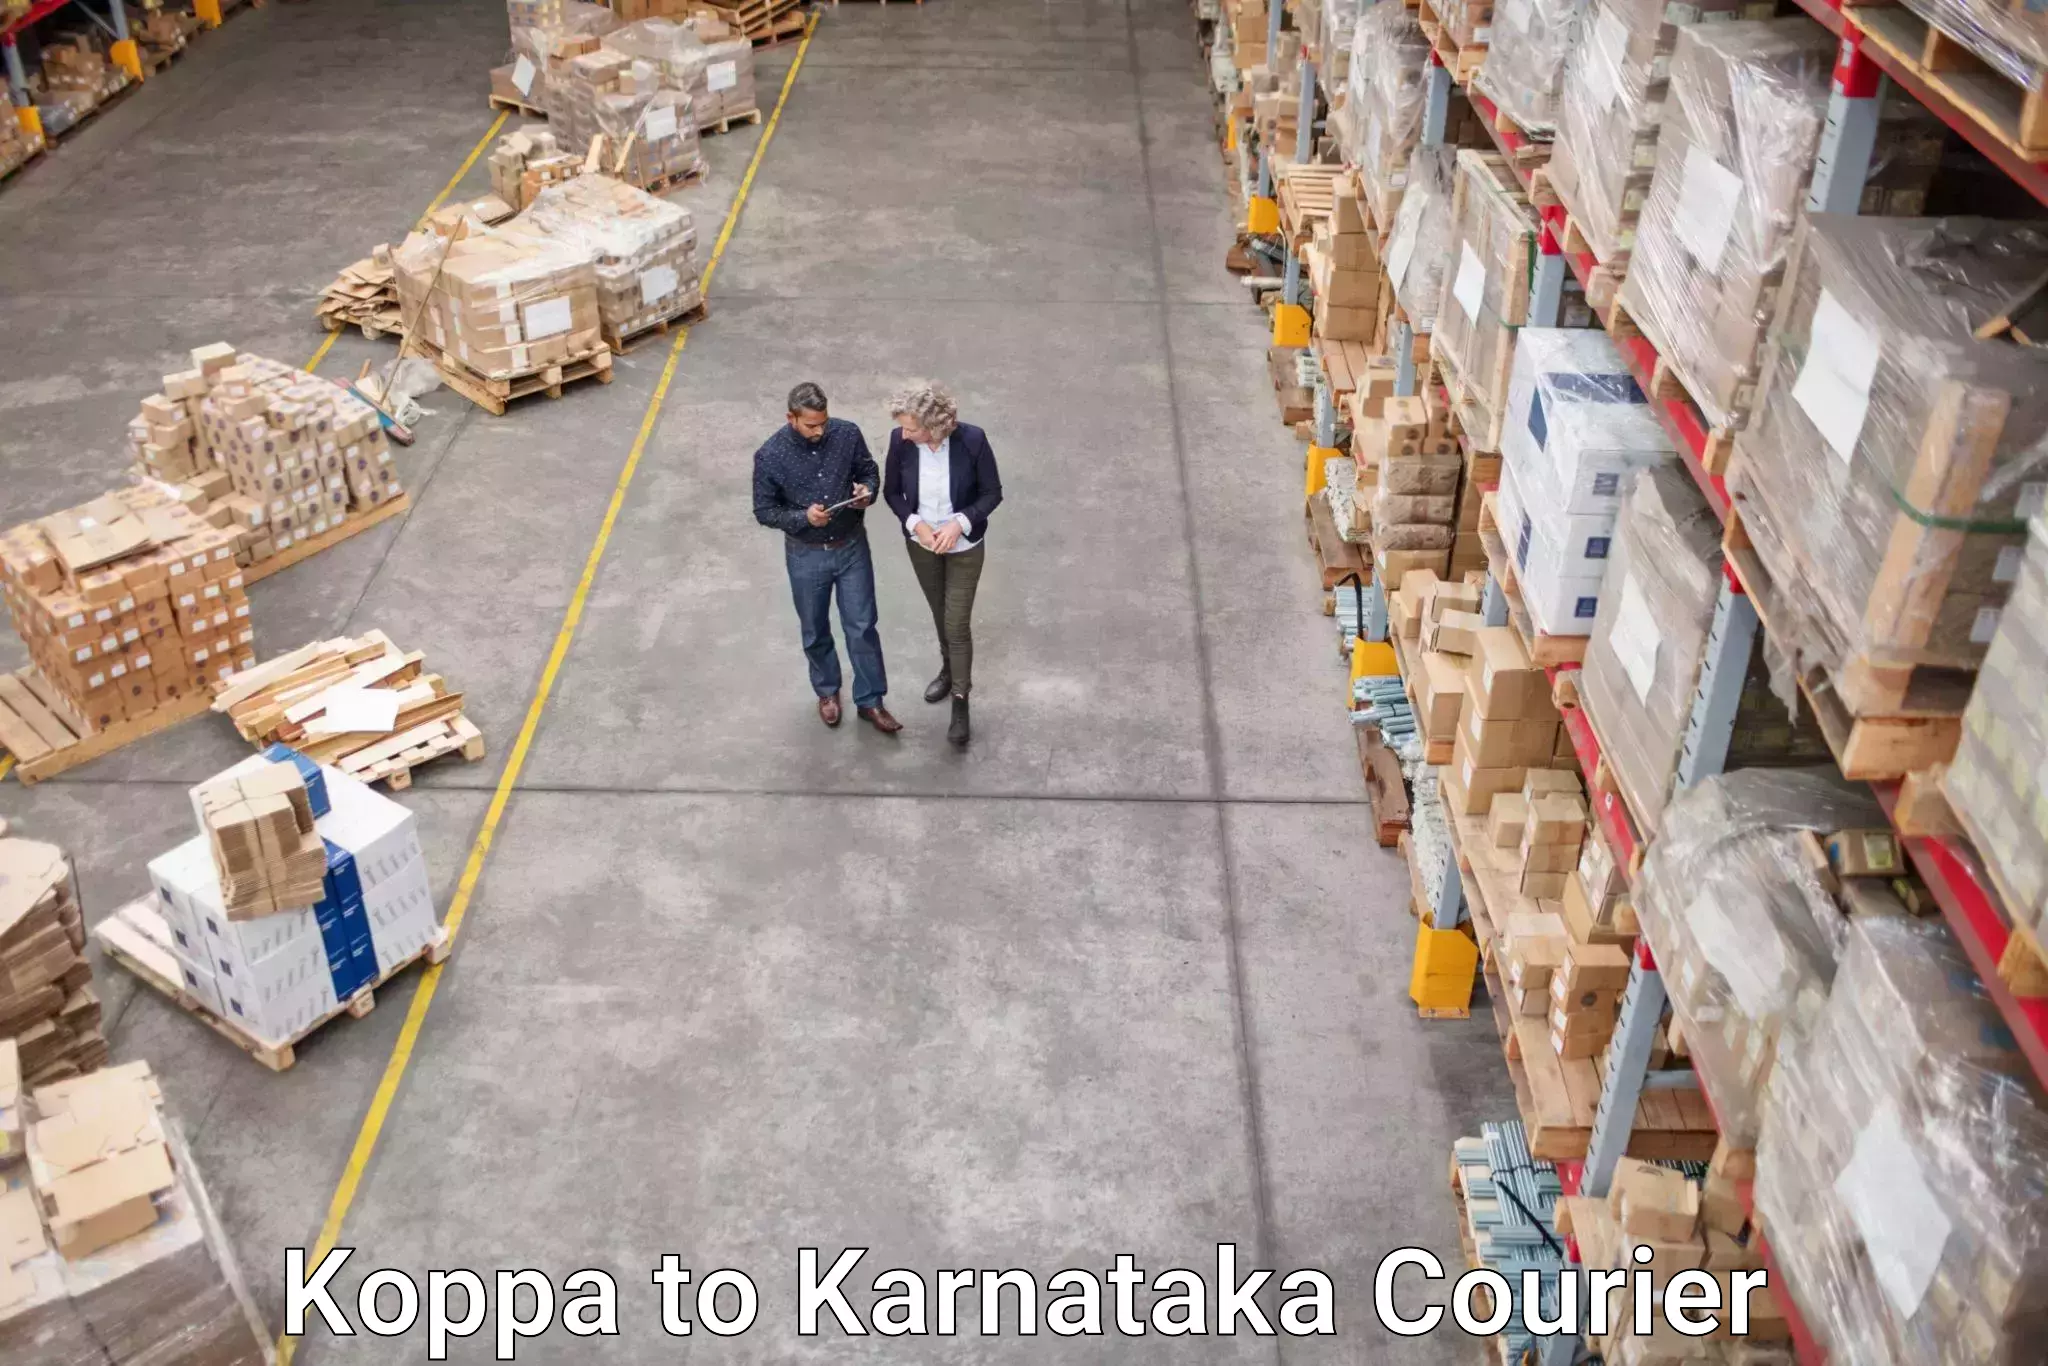 Cash on delivery service Koppa to Karnataka